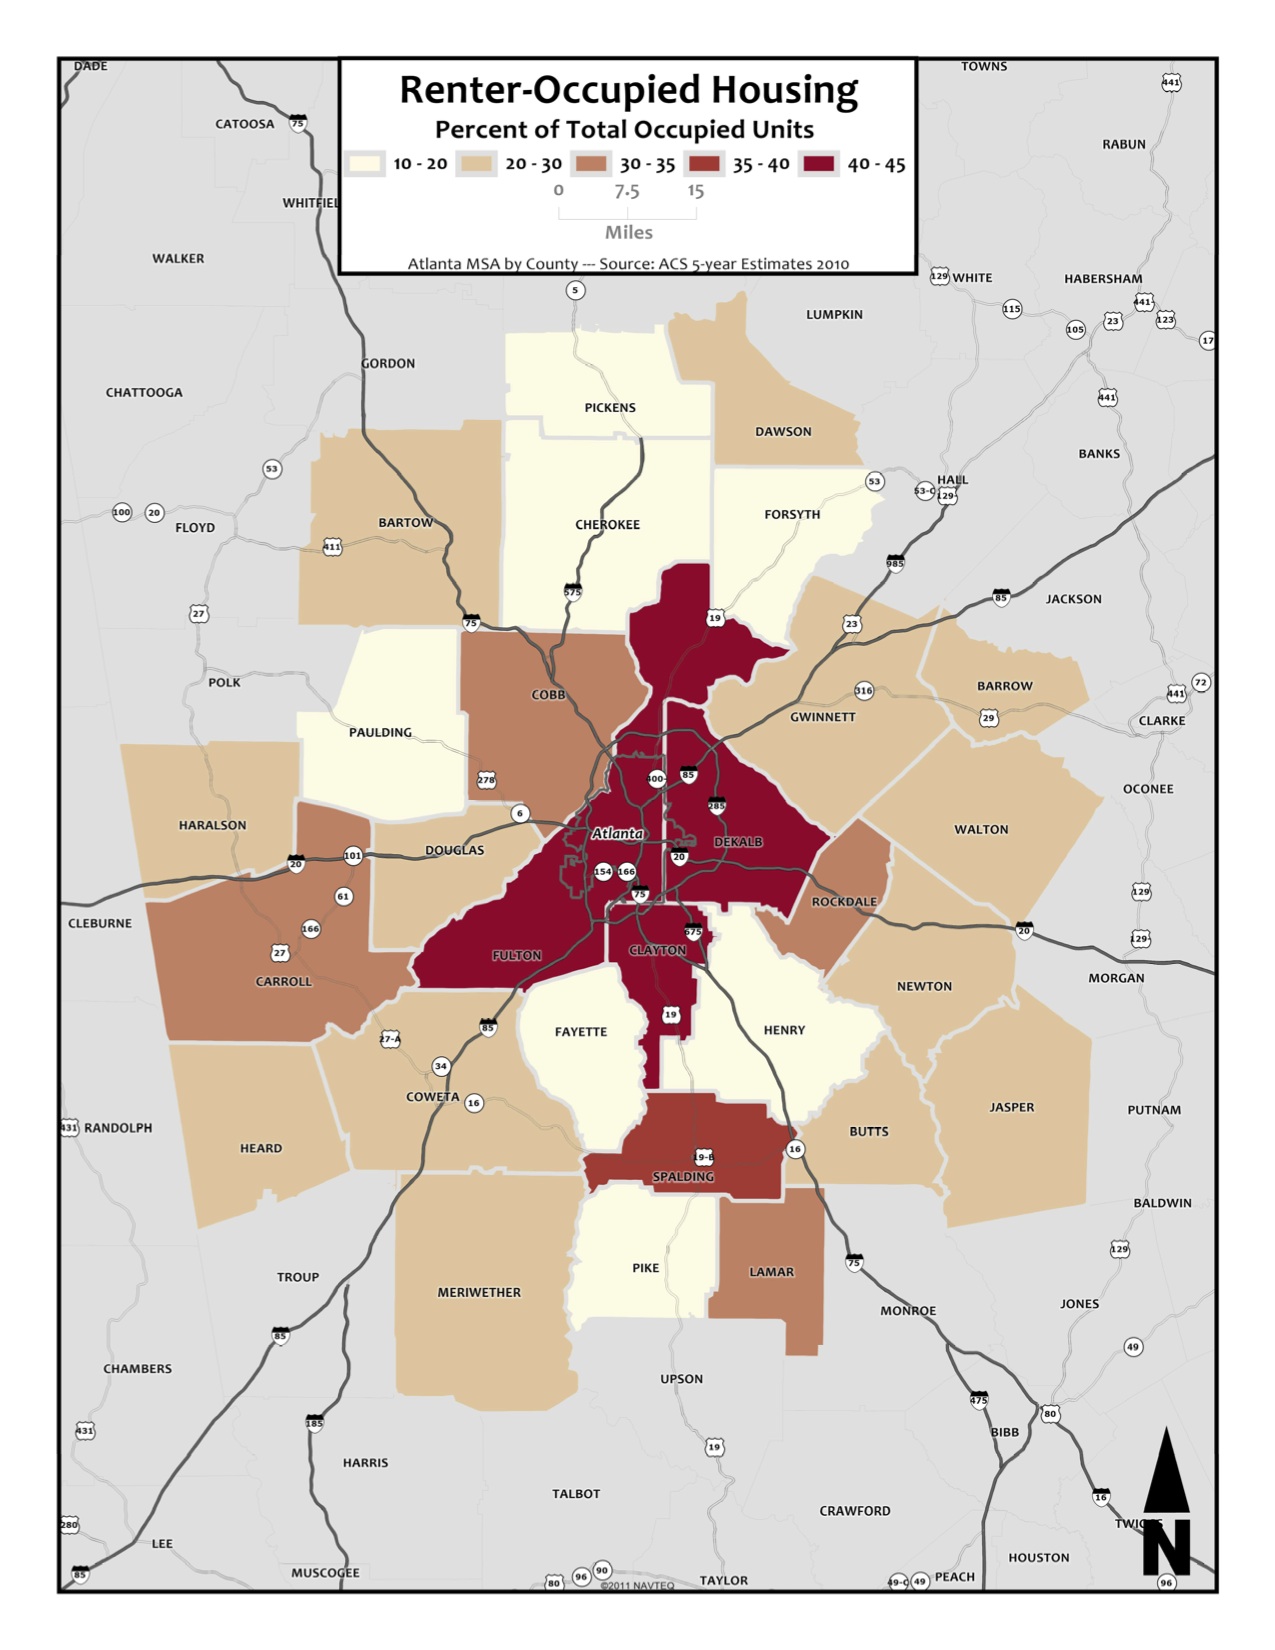 Renter Occupied Housing Percent – metro counties